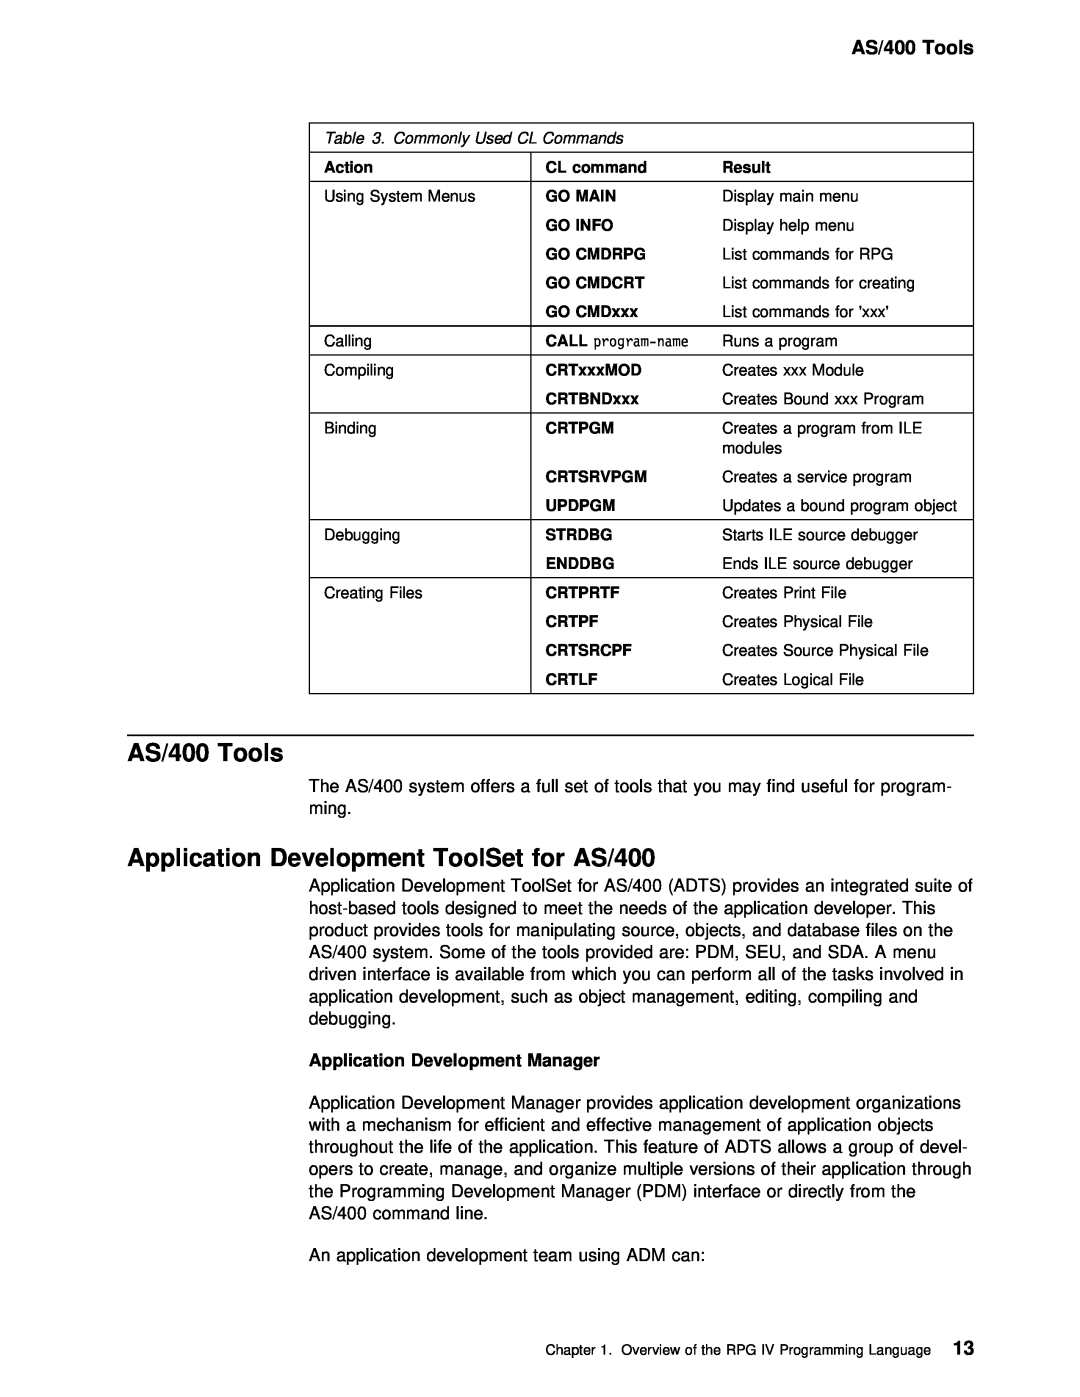 IBM manual Application Development, AS/400 Tools, for AS/400 